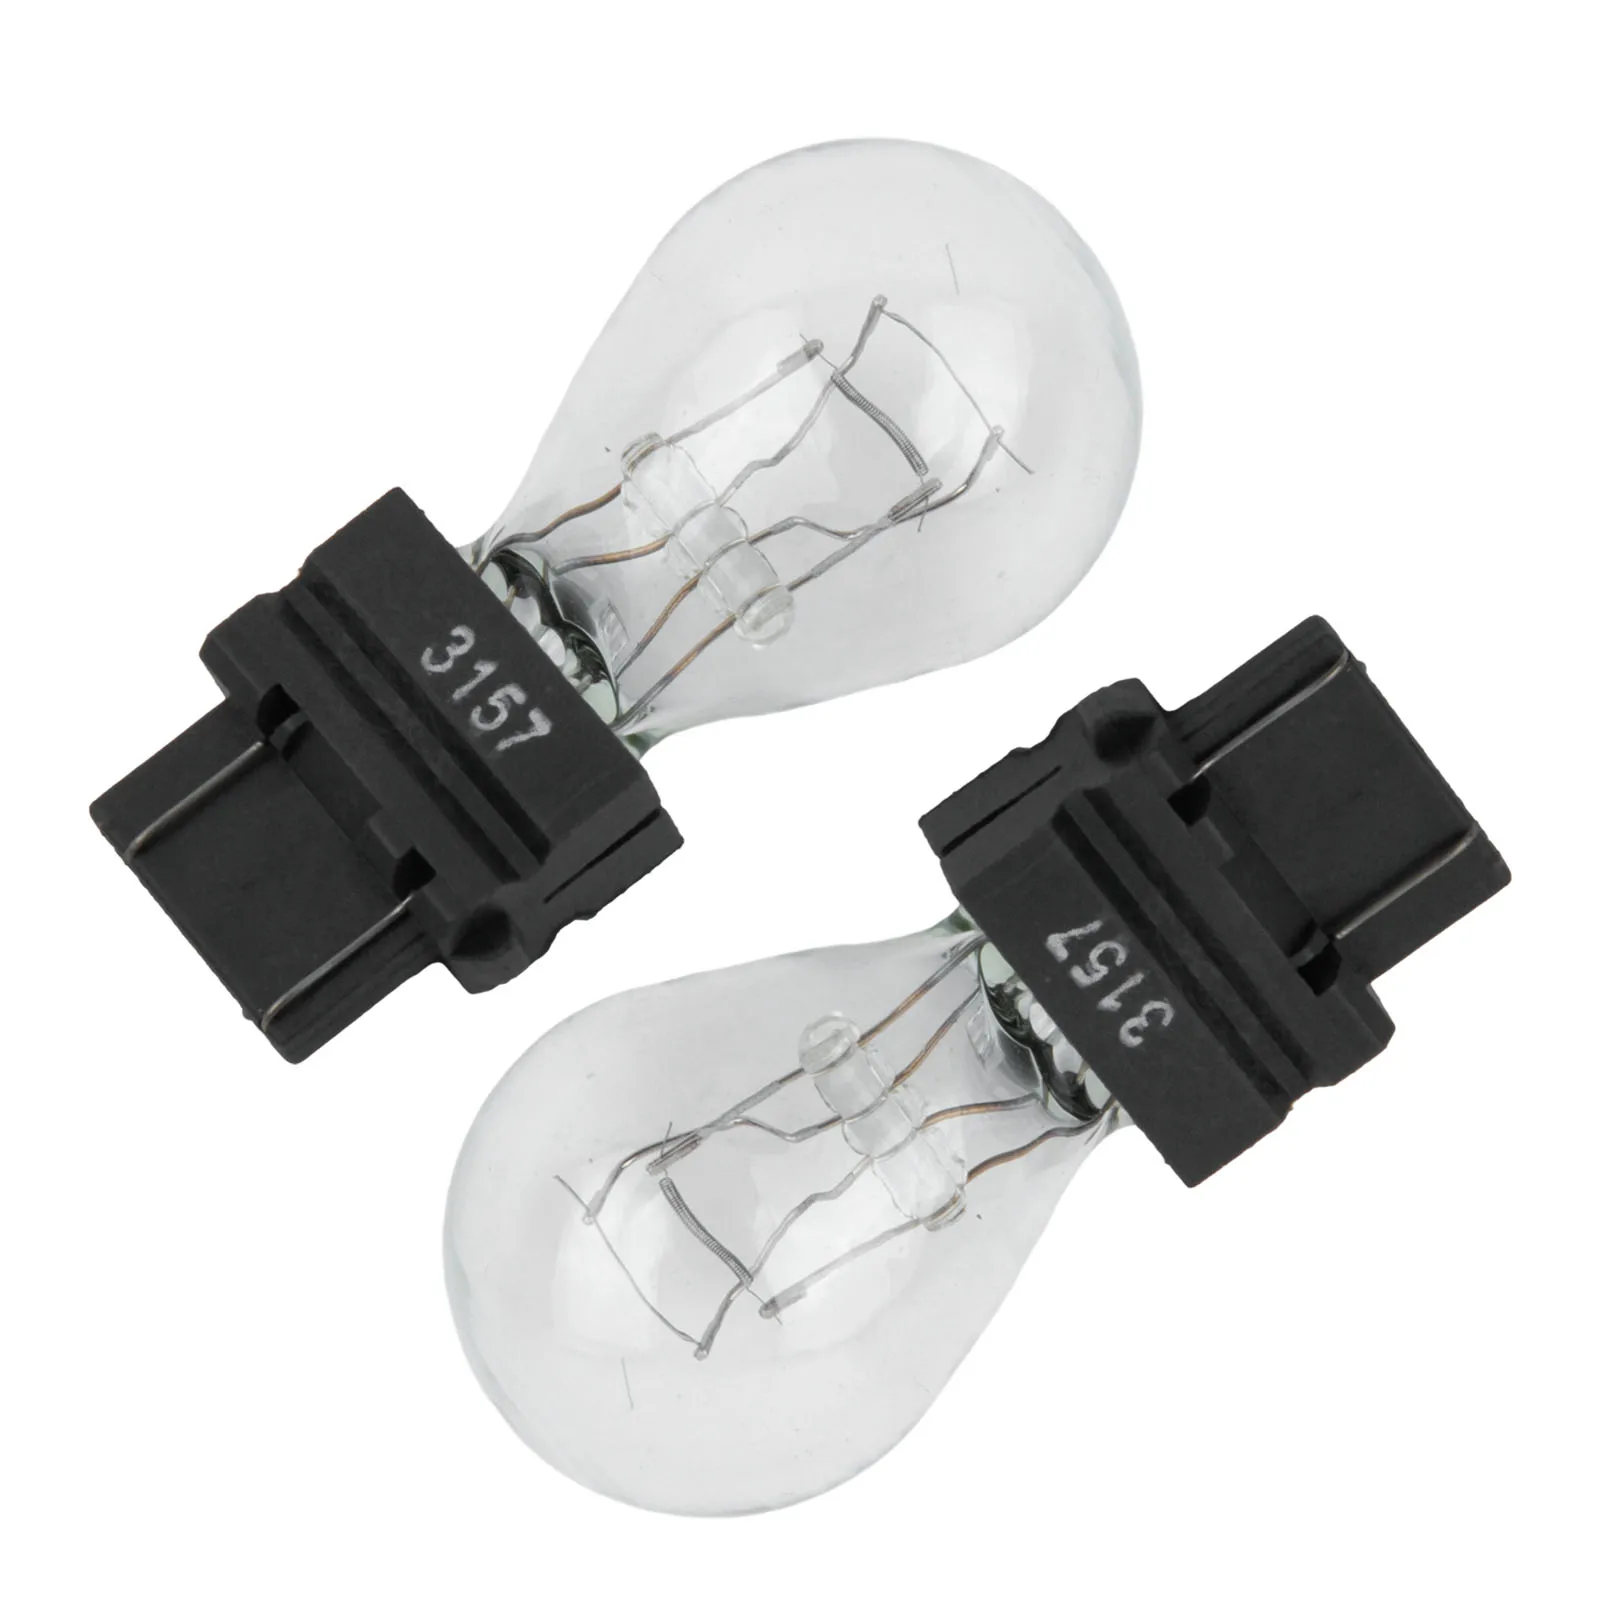 

Bulbs Brake Light 12V 21/5W Car Accessories Clear Shell Quartz Glass Tail Signal Turn Signal Light Practical To Use